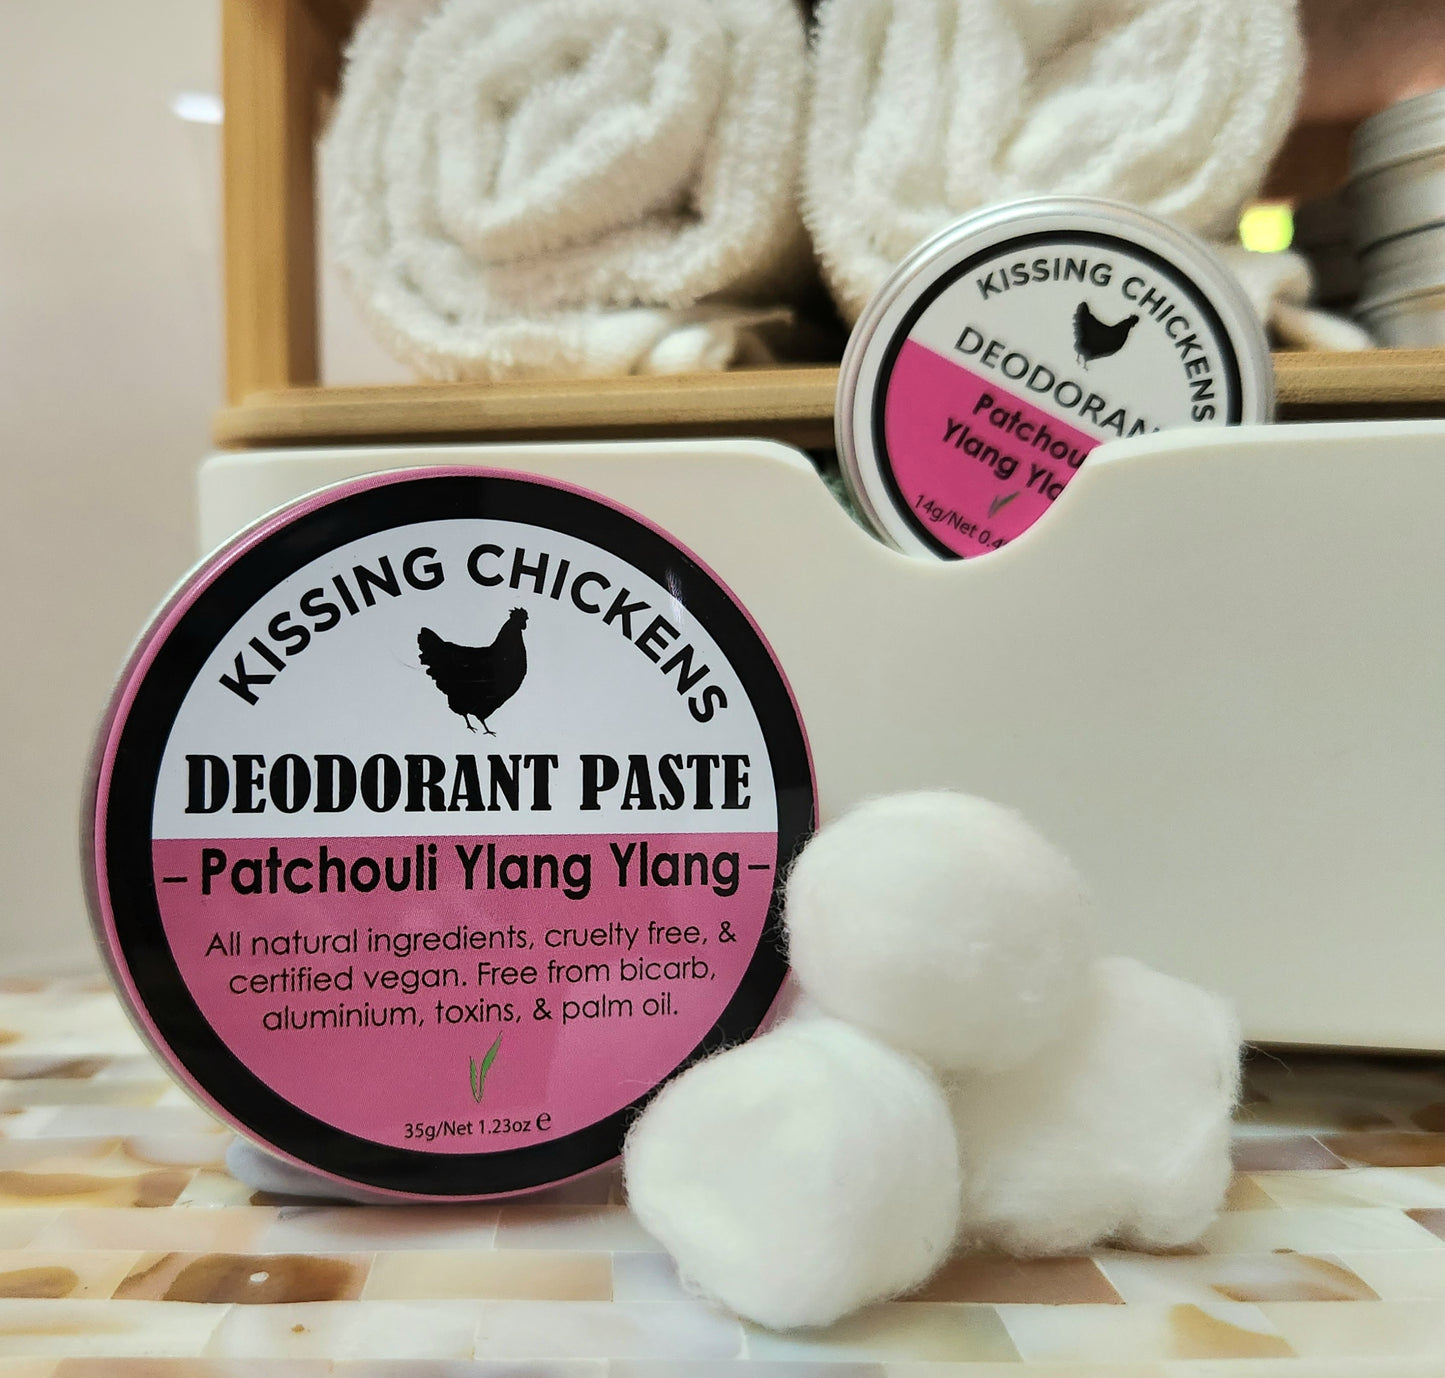 Kissing Chickens Bicarb-Free Natural Deodorant Paste - Patchouli & Ylang Ylang 35g tin